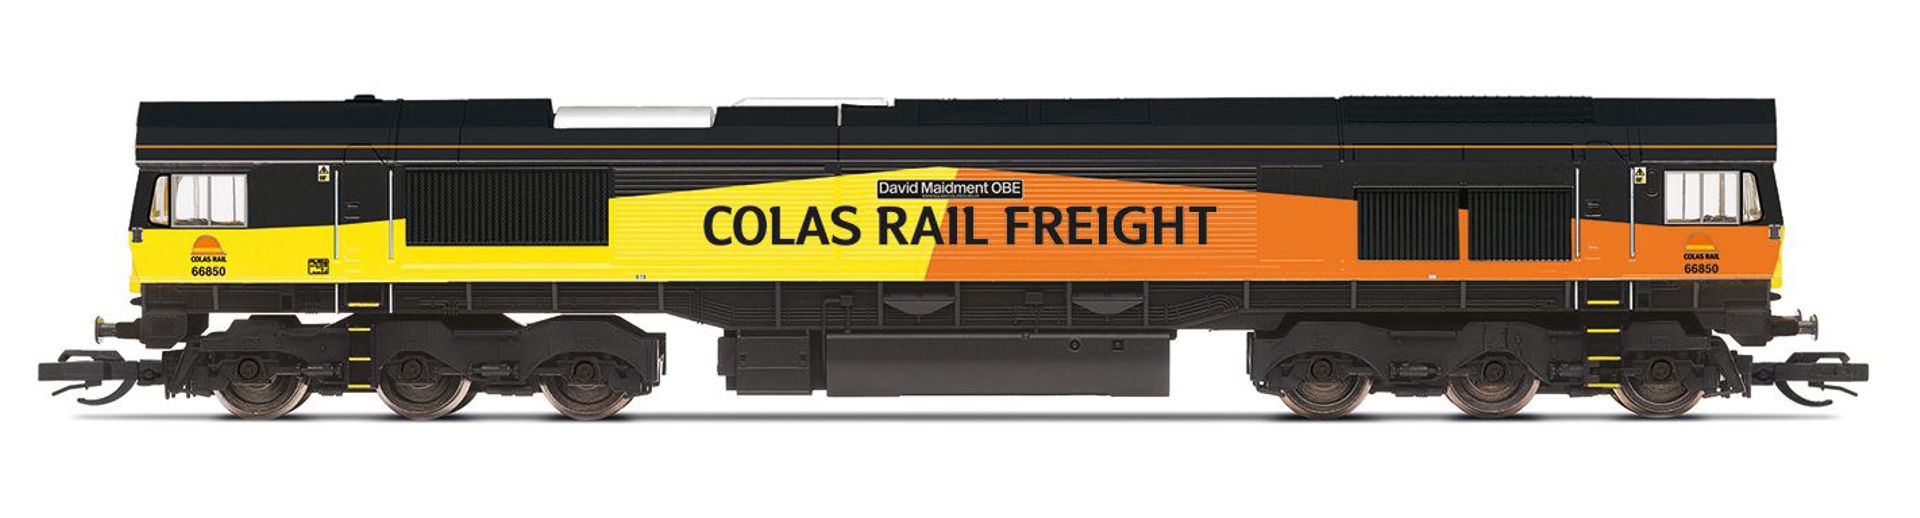 Hornby TT3019TXSM - Colas Rail, Class 66, Co-Co, 66850, 'David Maidment OBE', Ep.VI, DC-Sound